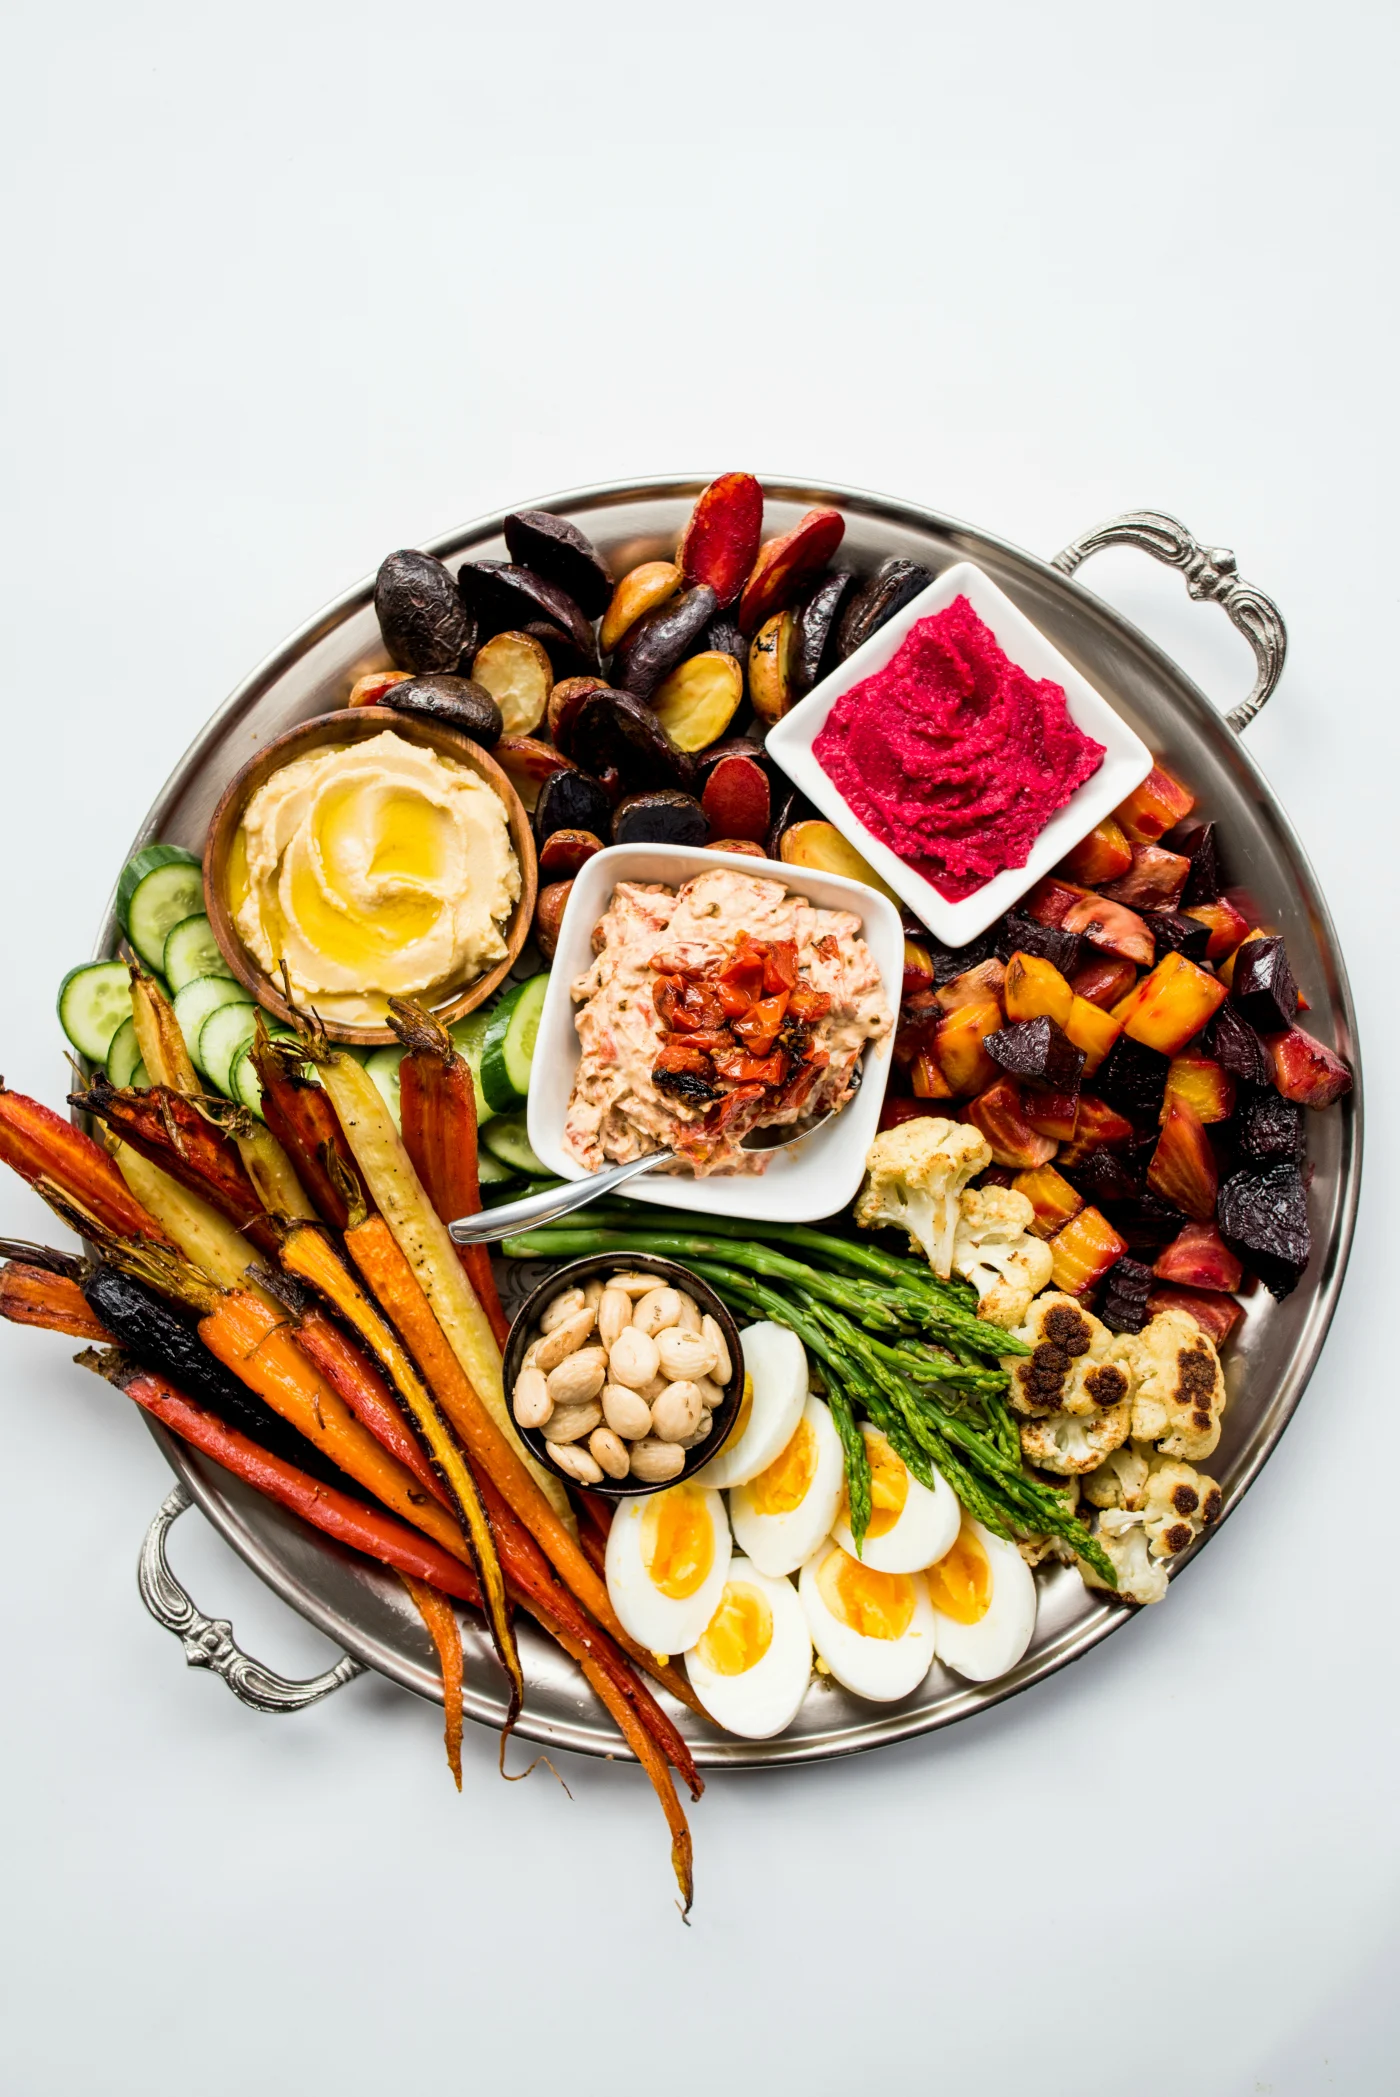 veggie tray ideas for thanksgiving